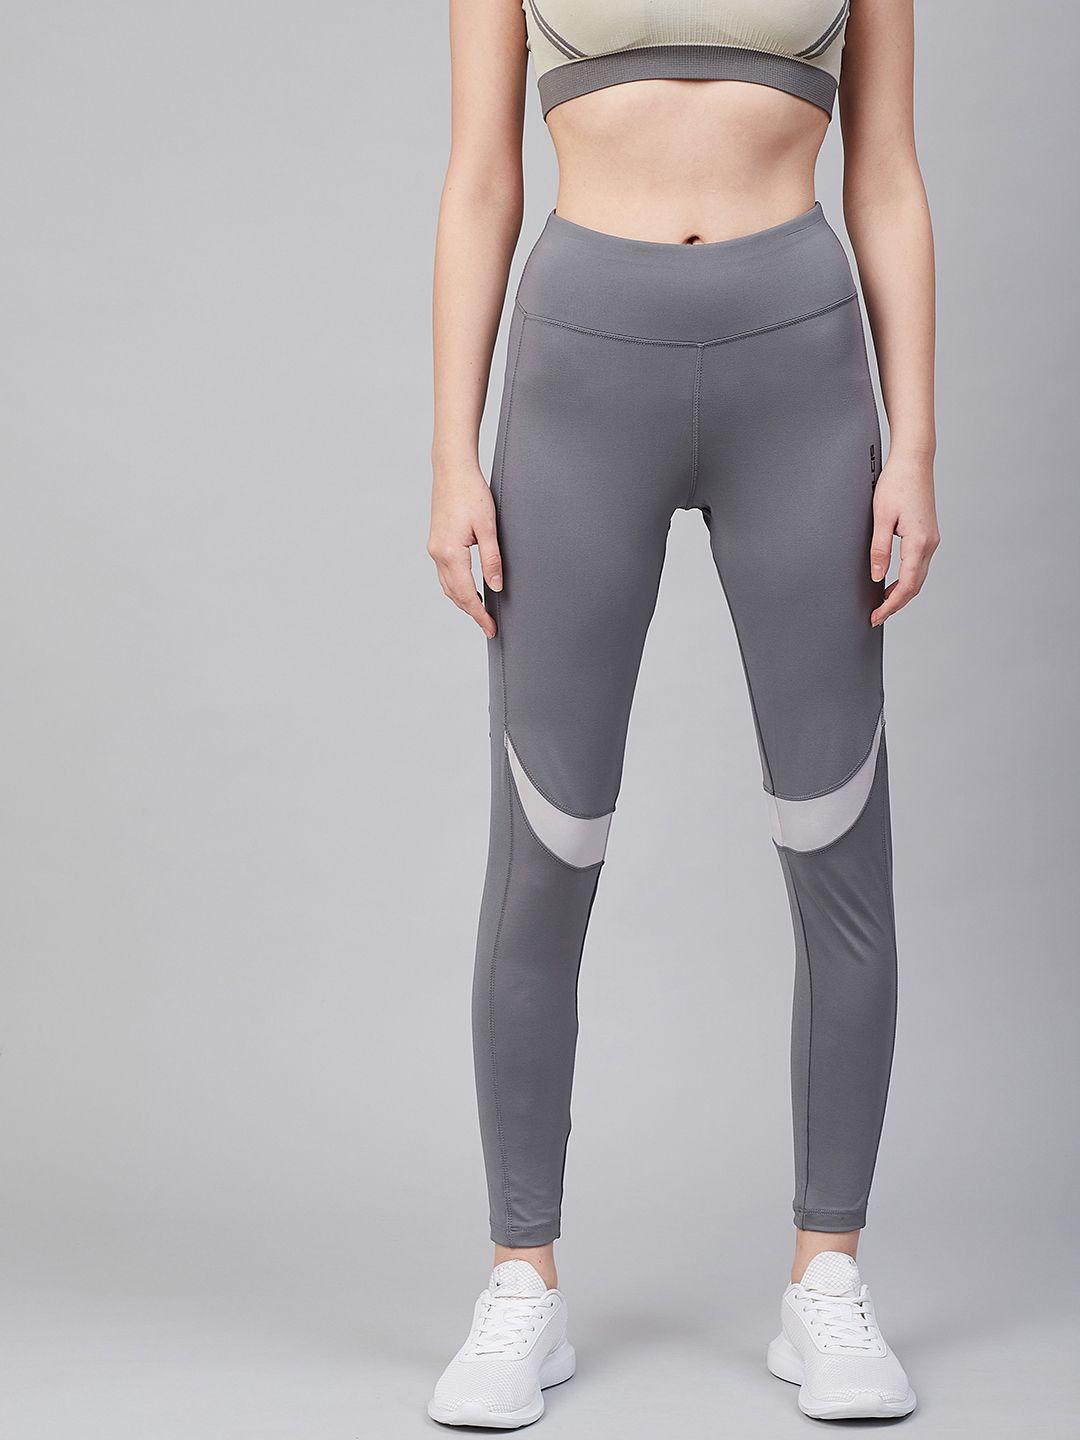 alcis-women-grey-solid-training-tights